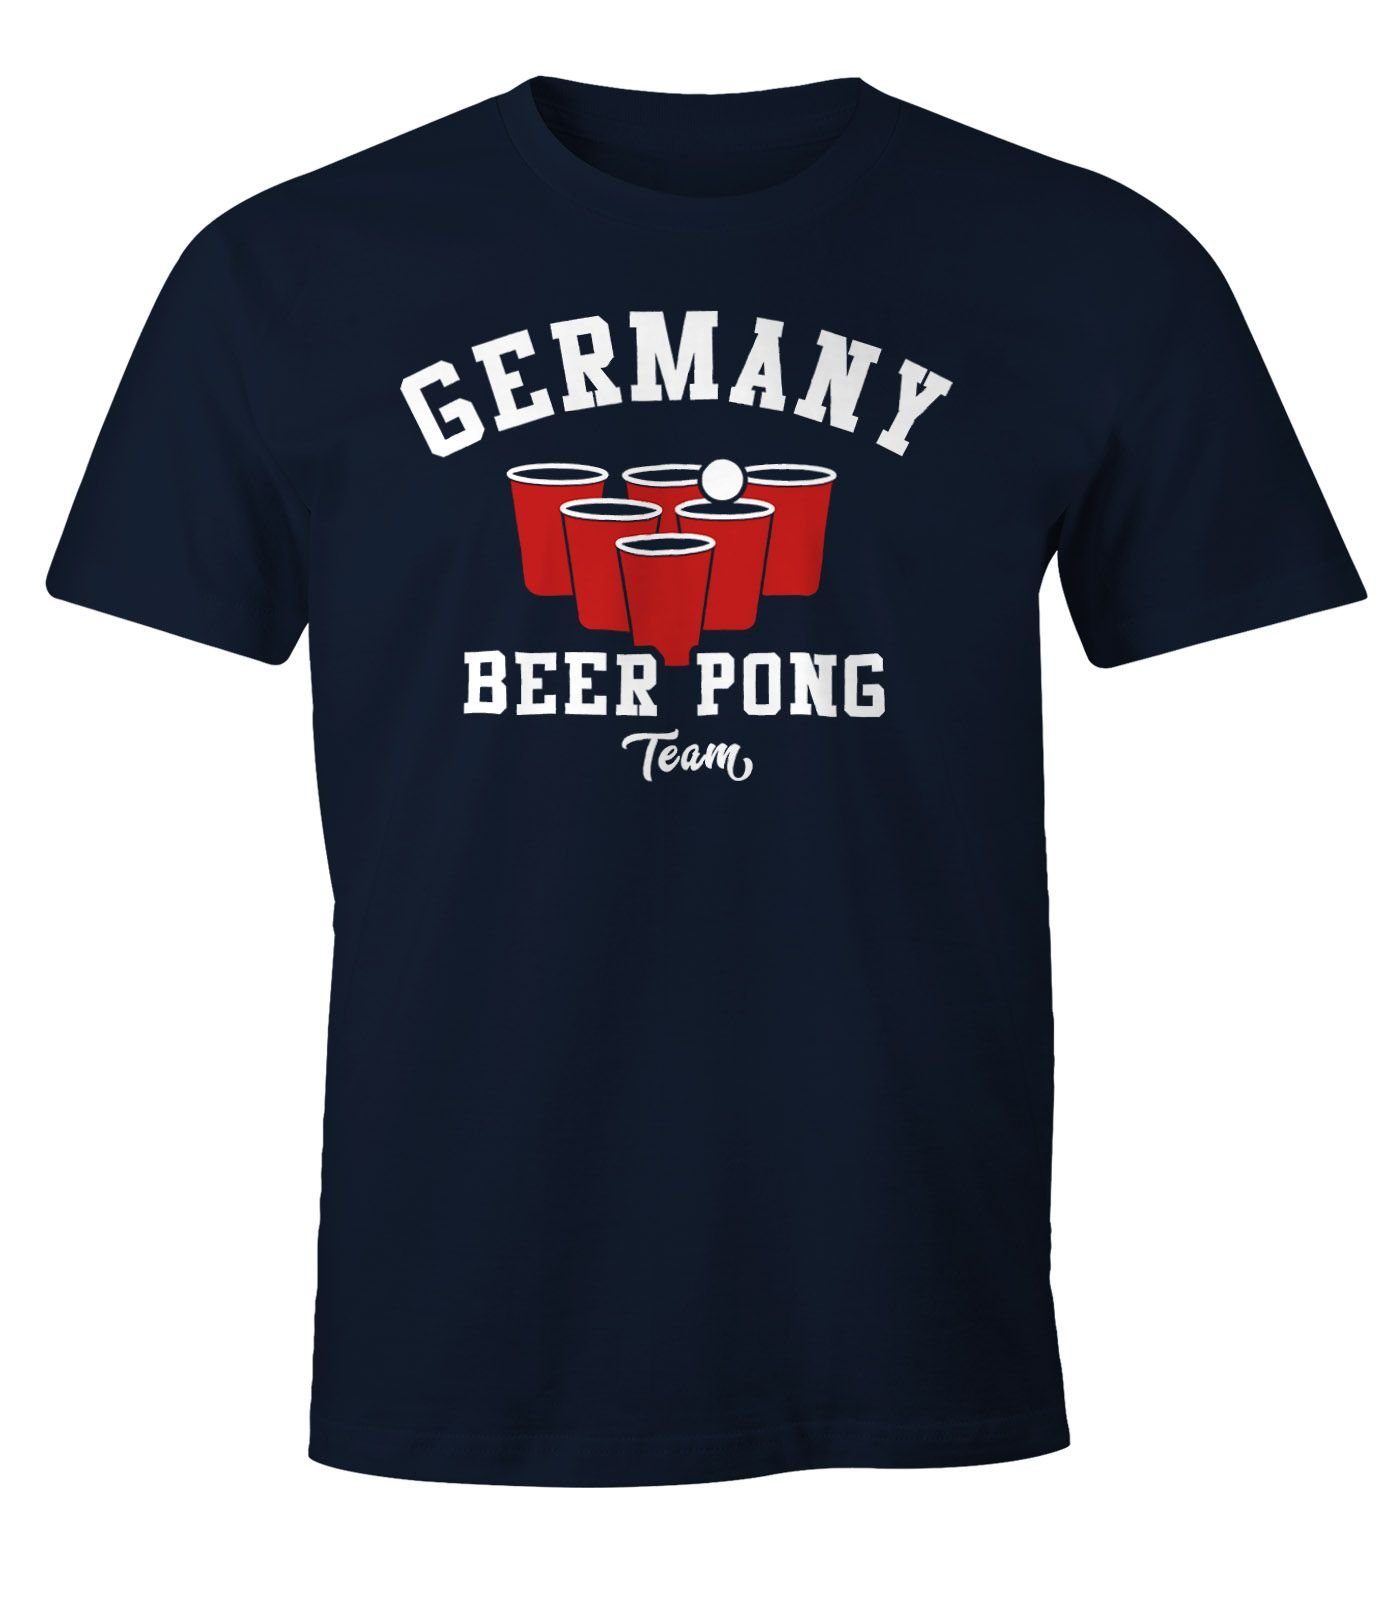 mit Moonworks® Print Team Fun-Shirt Herren T-Shirt Pong Germany Beer Bier MoonWorks Print-Shirt navy